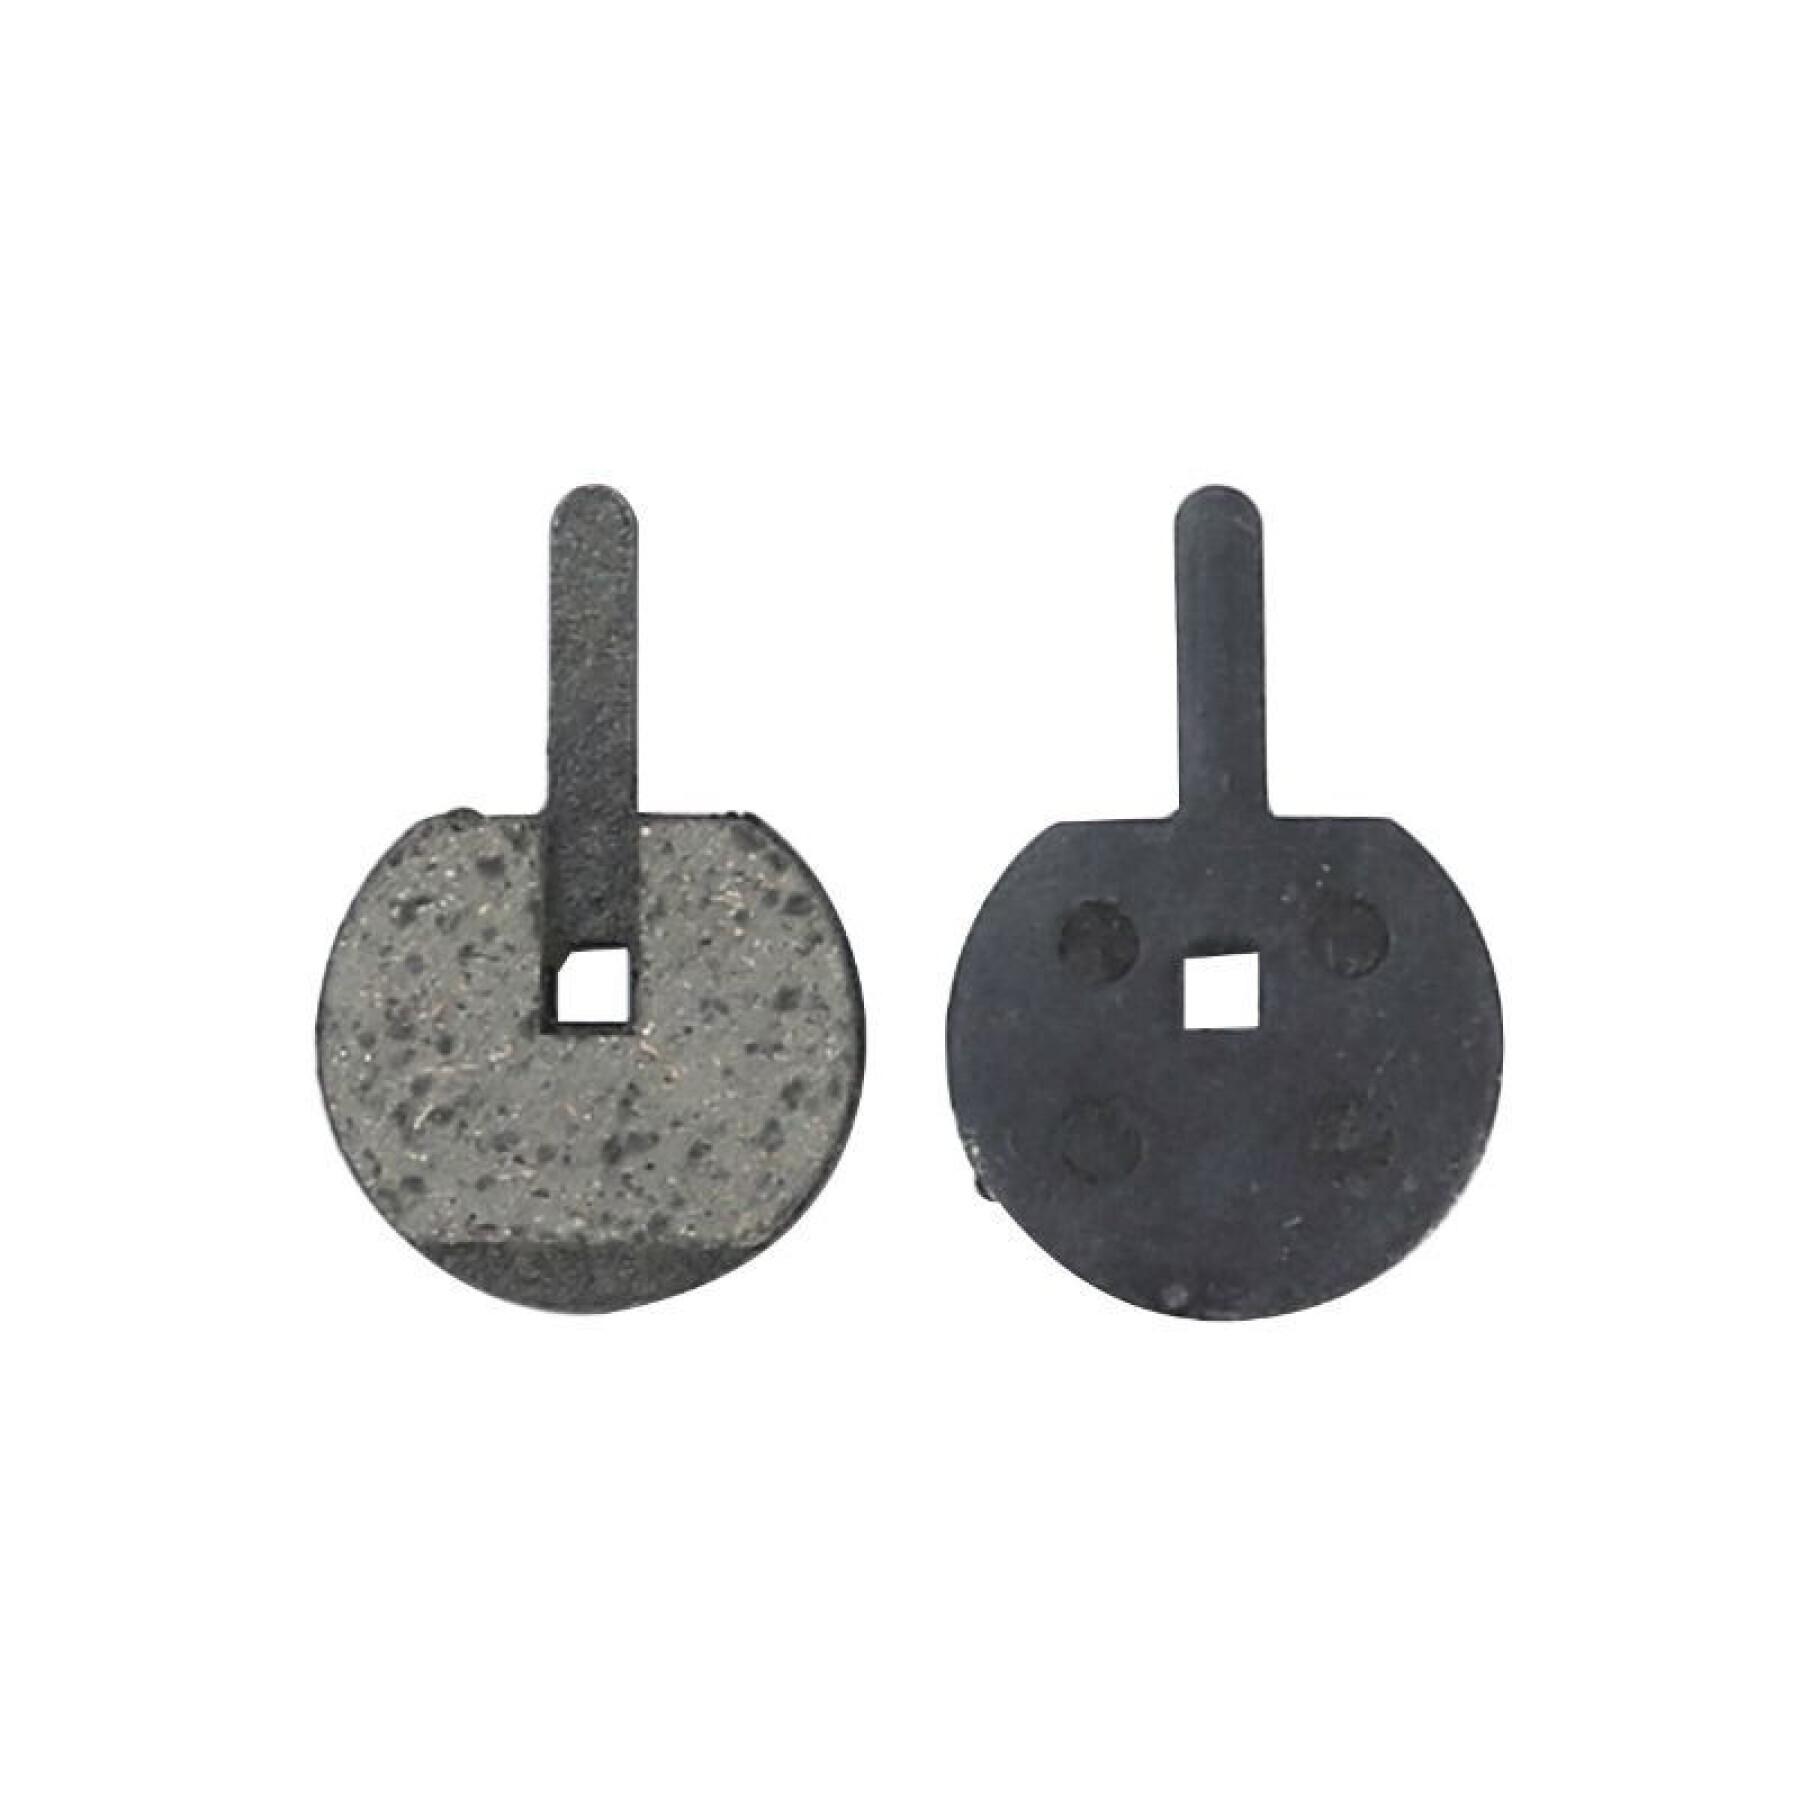 Pair of bike brake pads for mechanical caliper P2R Saccon Ref 179927-179928